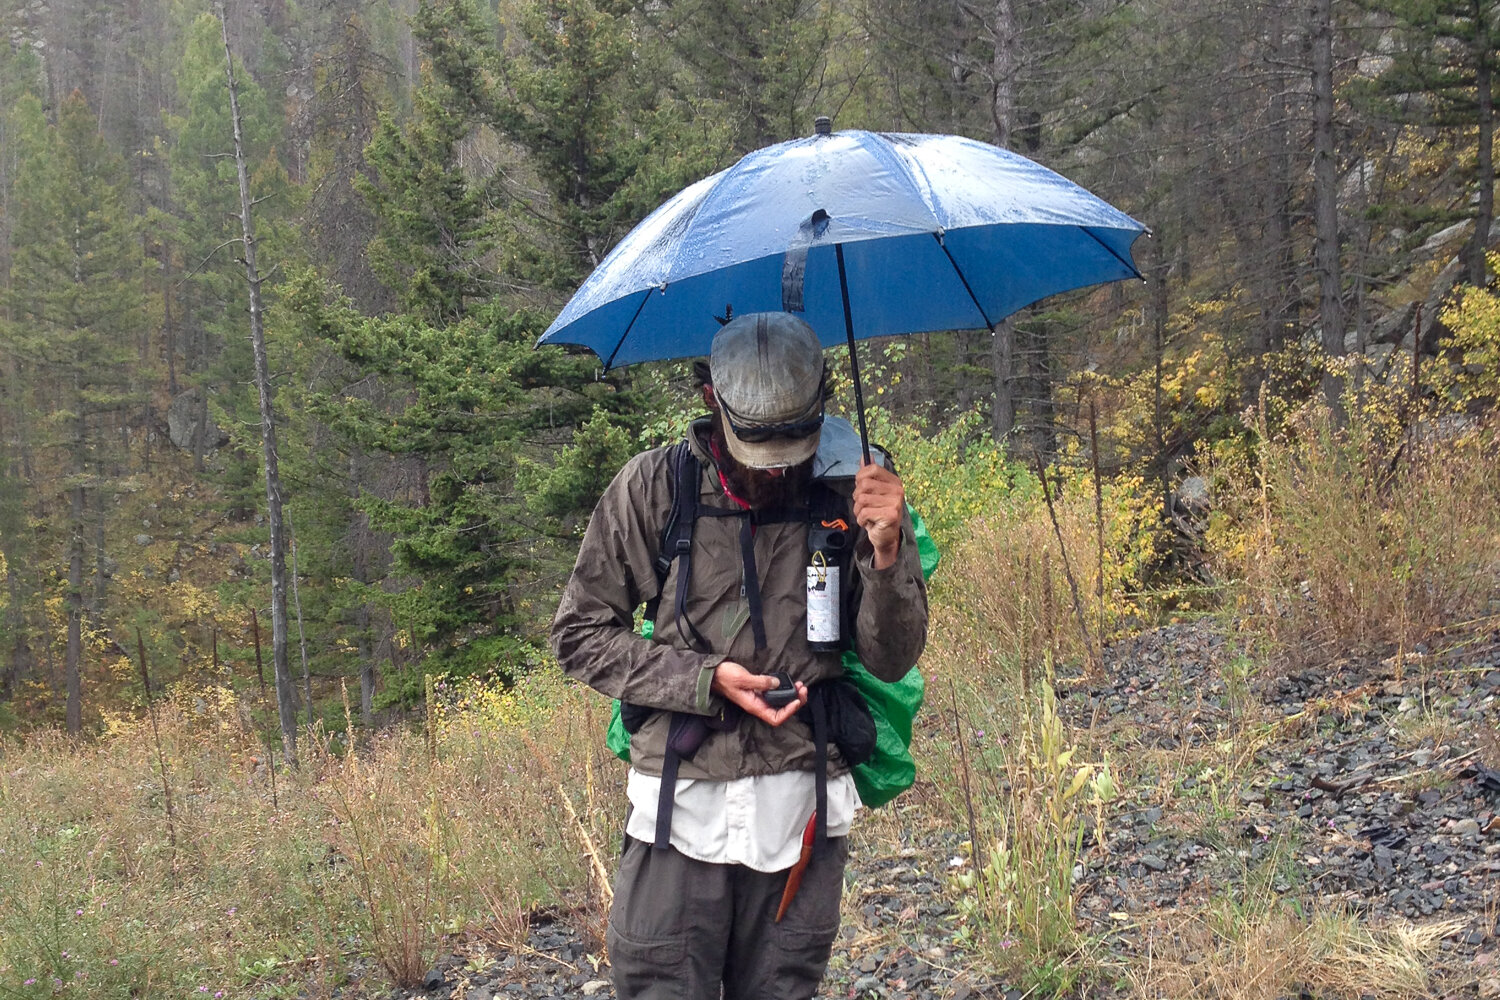 Armed with bear spray, a GPS, and an umbrella on the CDT